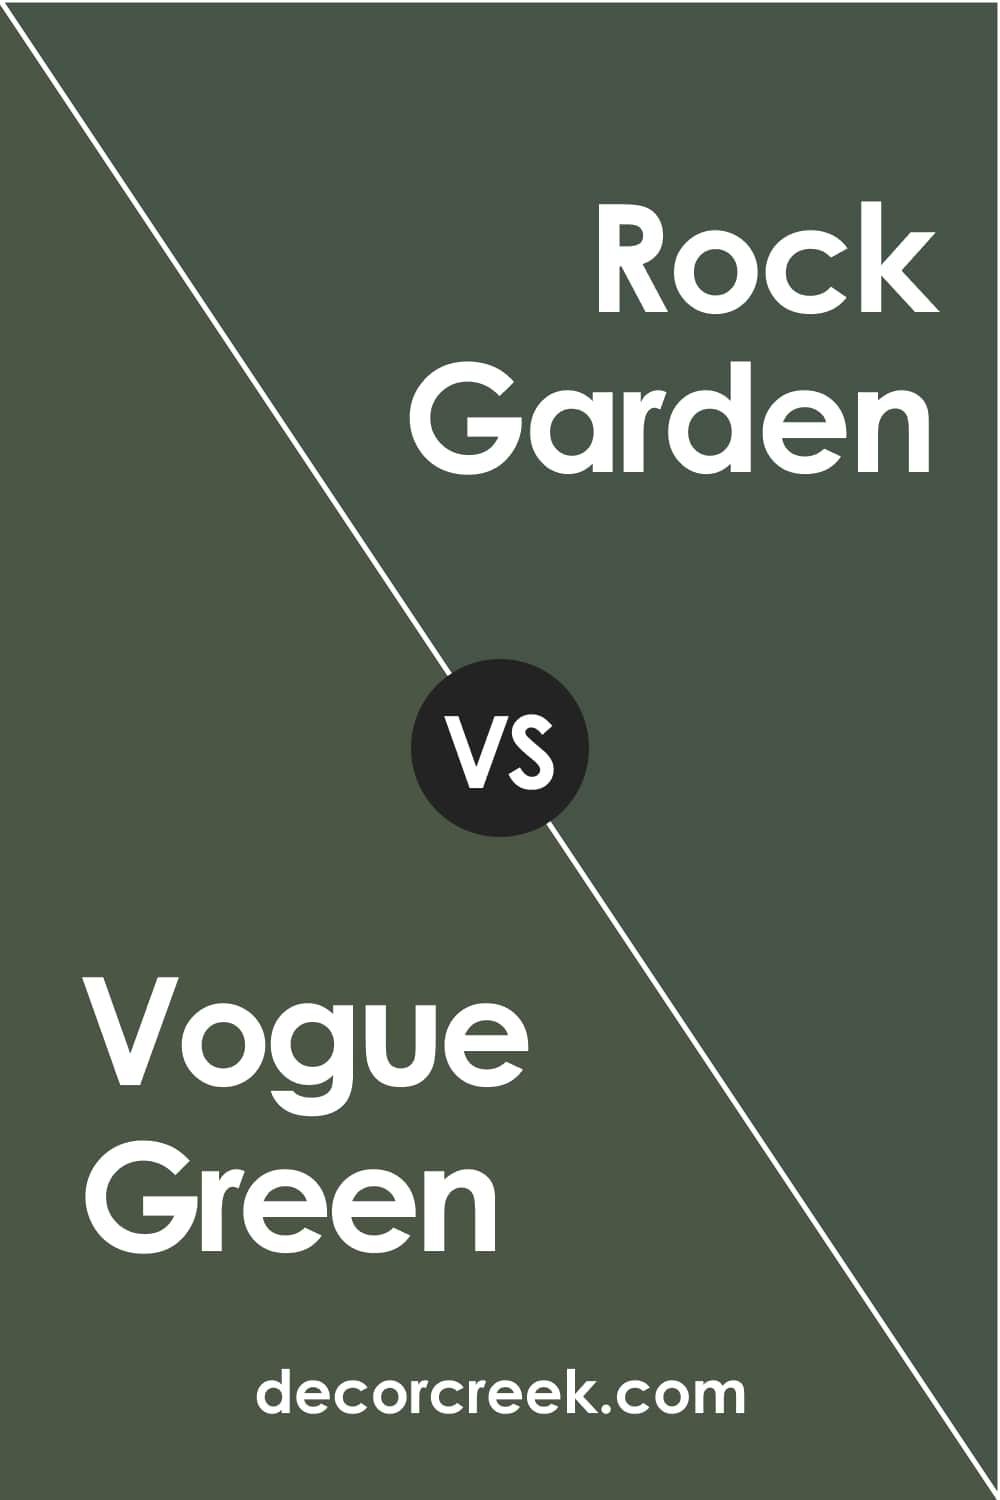 Vogue Green vs Rock Garden